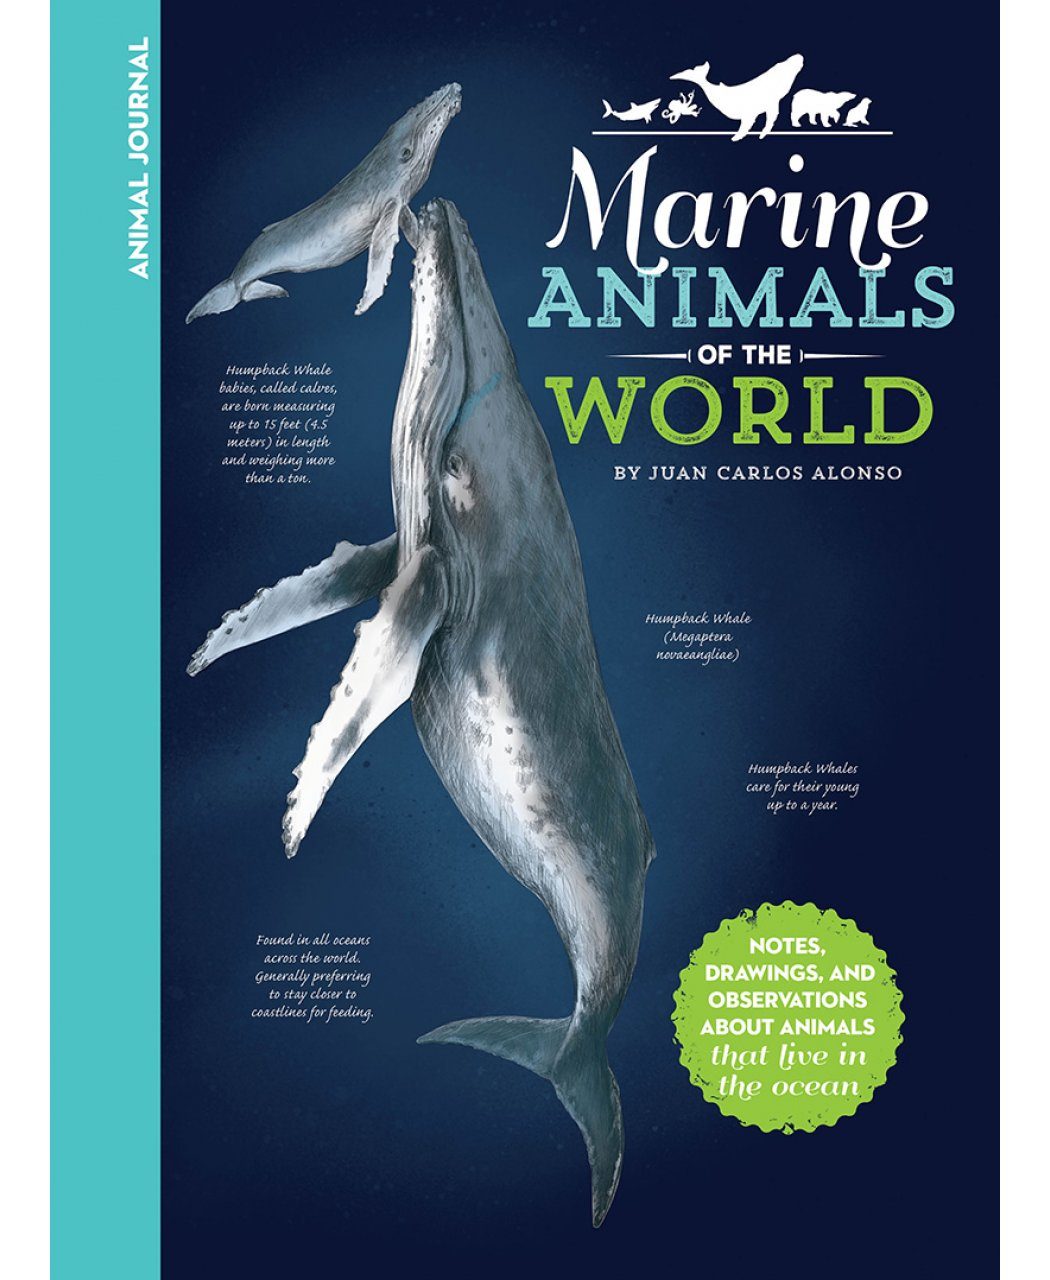 Marine Animals of the World | NHBS Academic & Professional Books